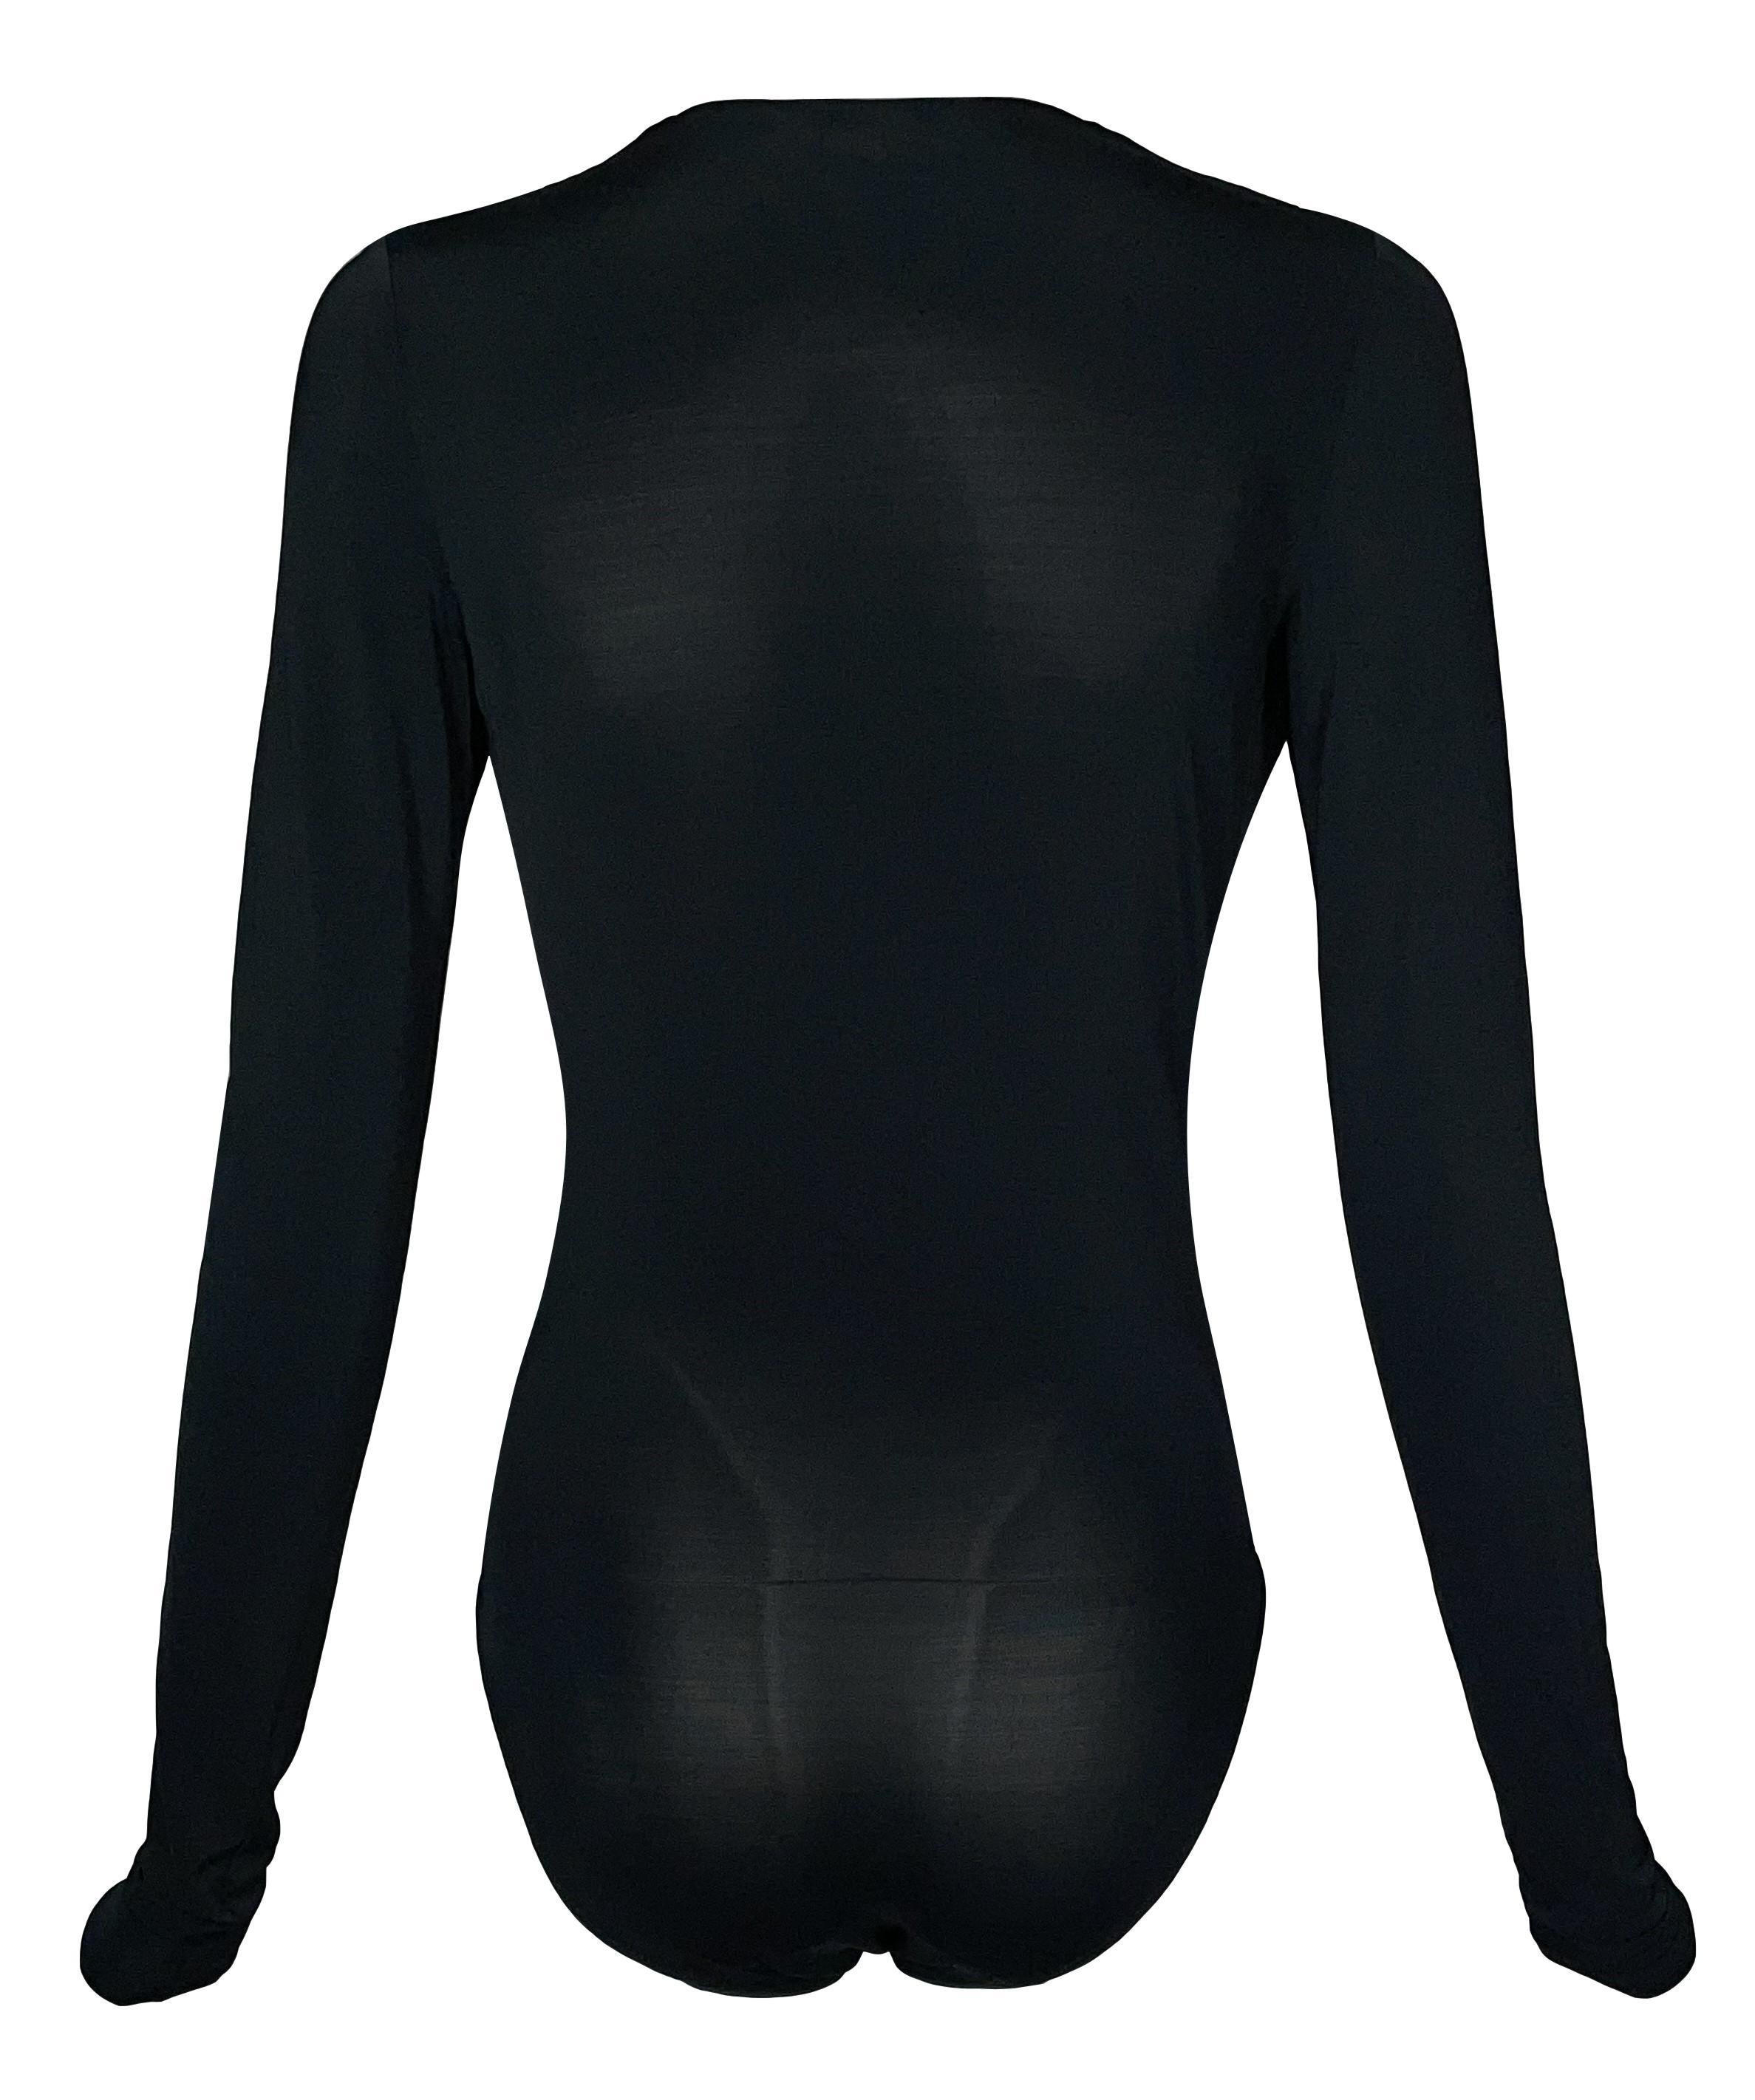 S/S 2001 Celine Runway Plunging Black Bodysuit Top In Excellent Condition In Yukon, OK